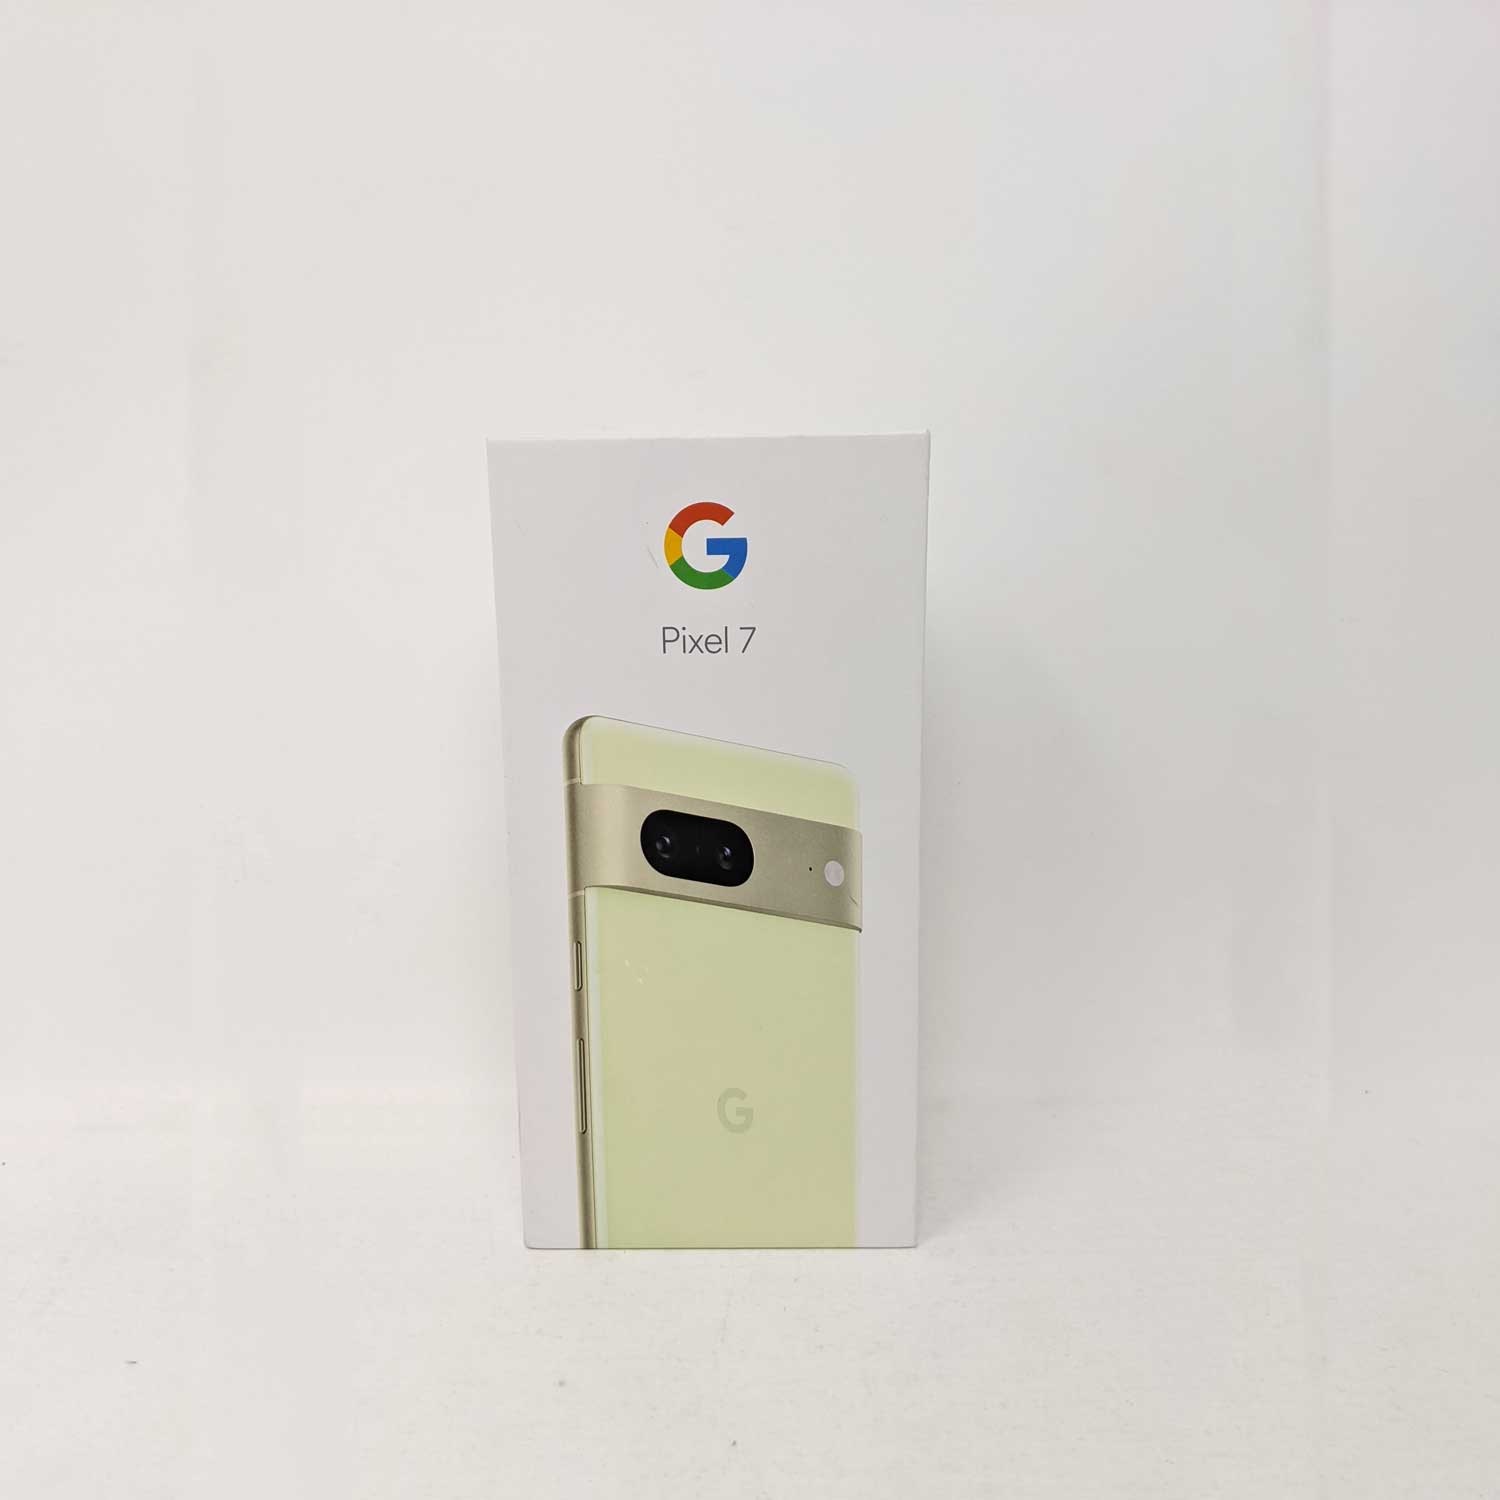 Google Pixel 7 5G GA03943-US GVU6C 128GB Factory Unlocked 8GB RAM Smartphone - Lemon Grass